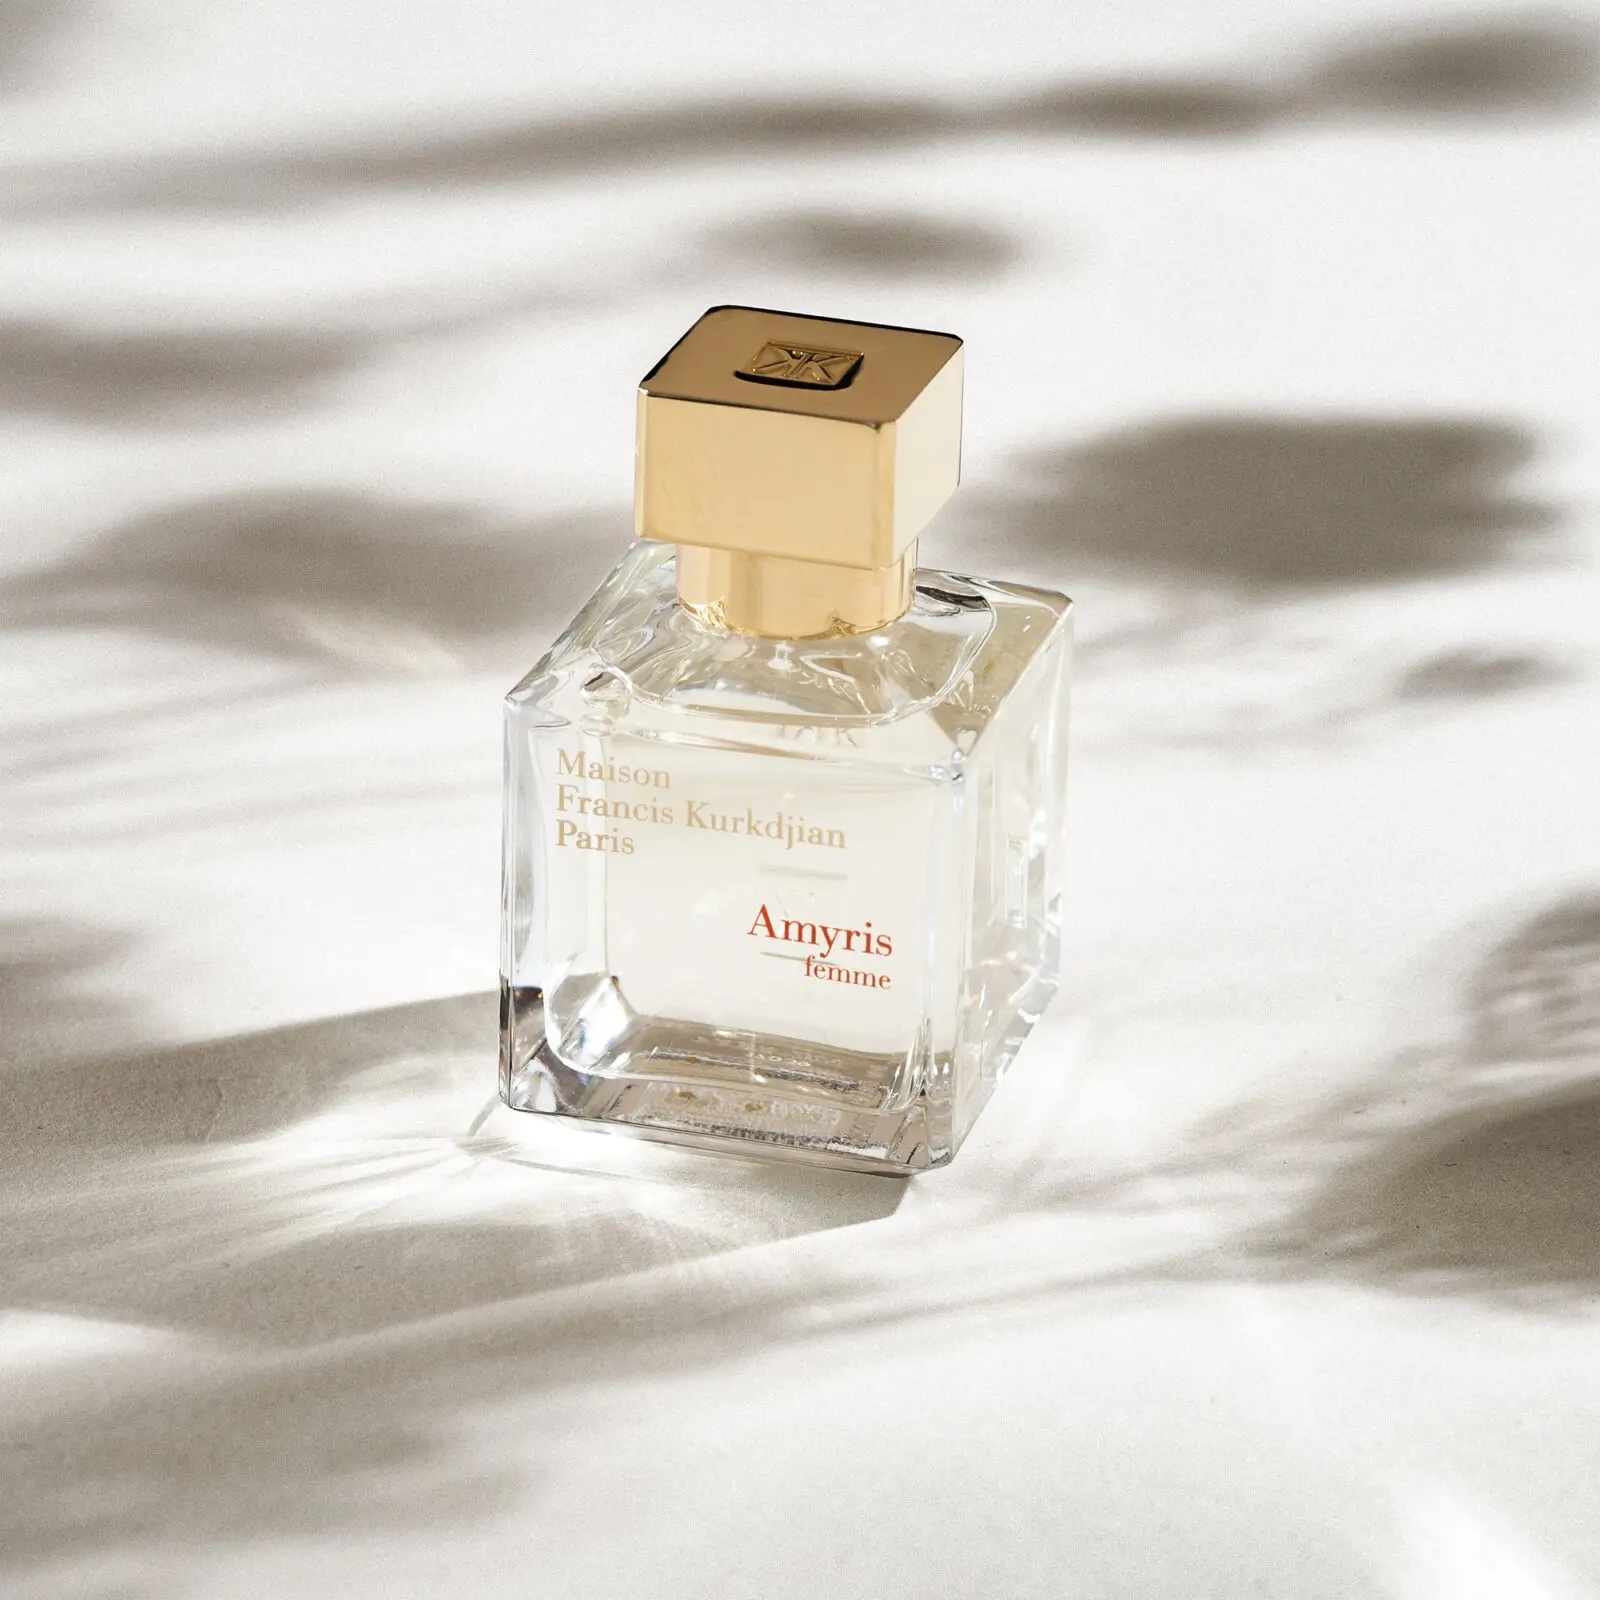 Maison Francis Kurkdjian - Amyris Femme eau de parfum 70 ml | Perfume Lounge